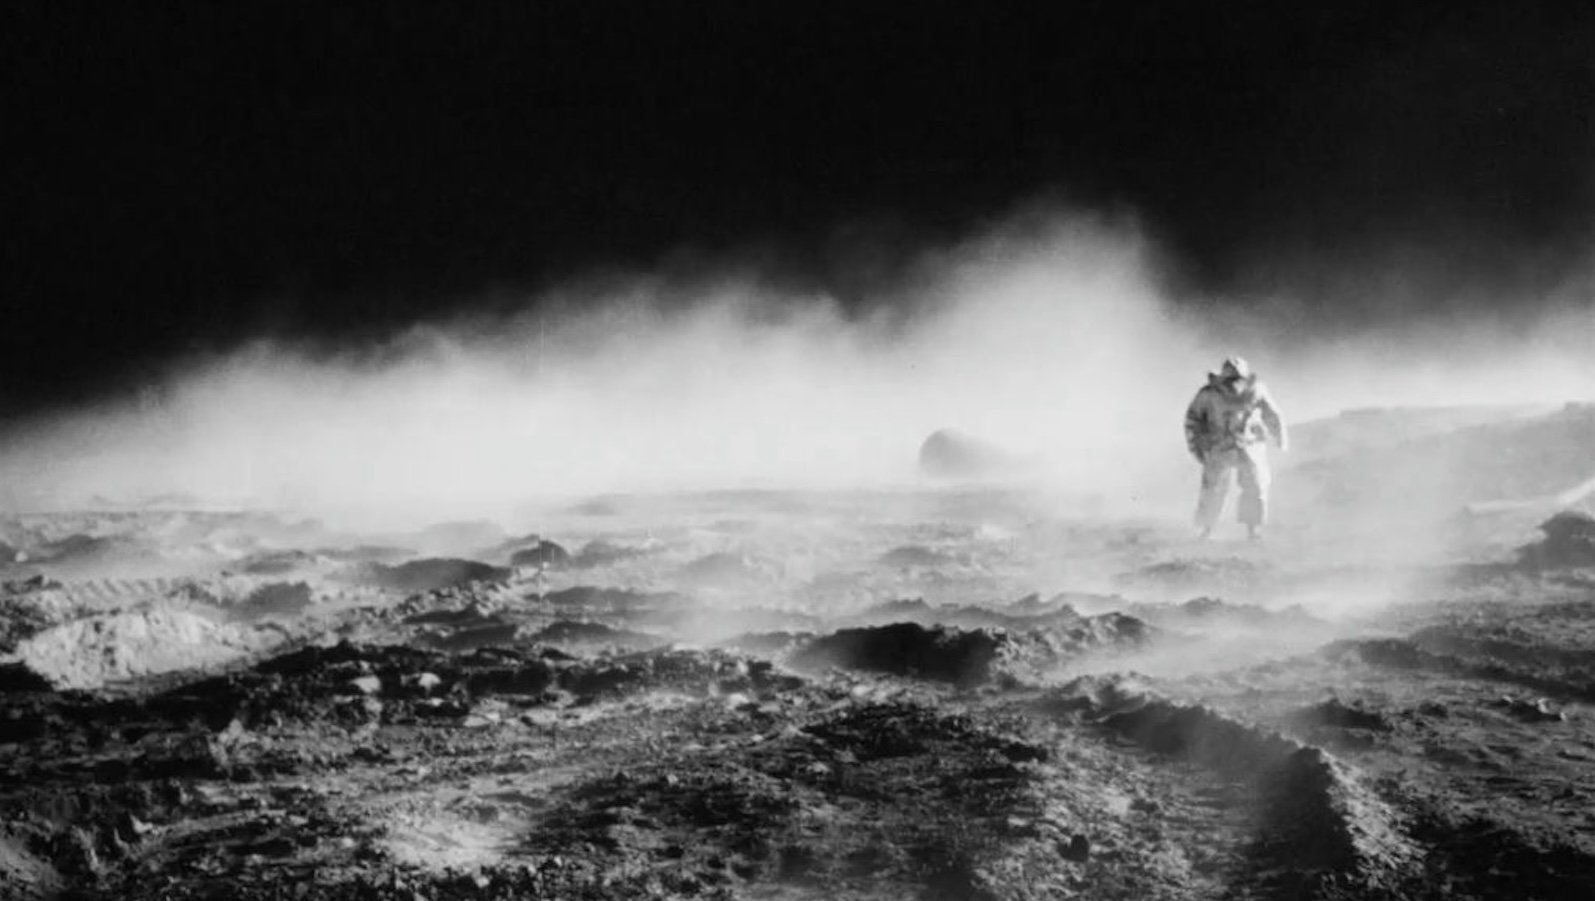 A man in a space suit seen from a distance walks across a rocky terrain enshrouded in fog